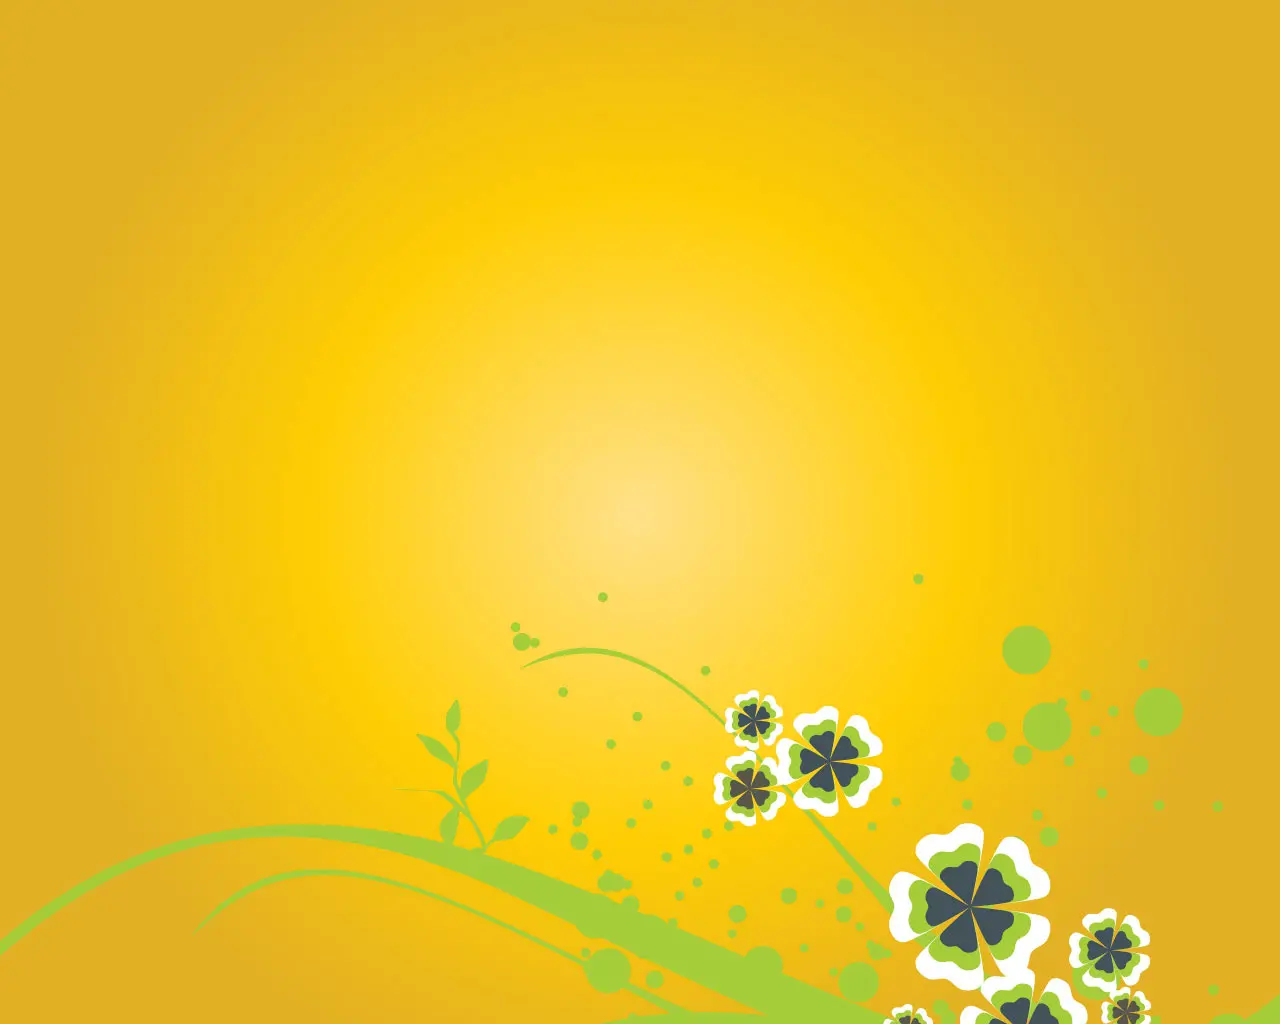 Latar belakang untuk situs web - bunga dengan latar belakang kuning yang indah